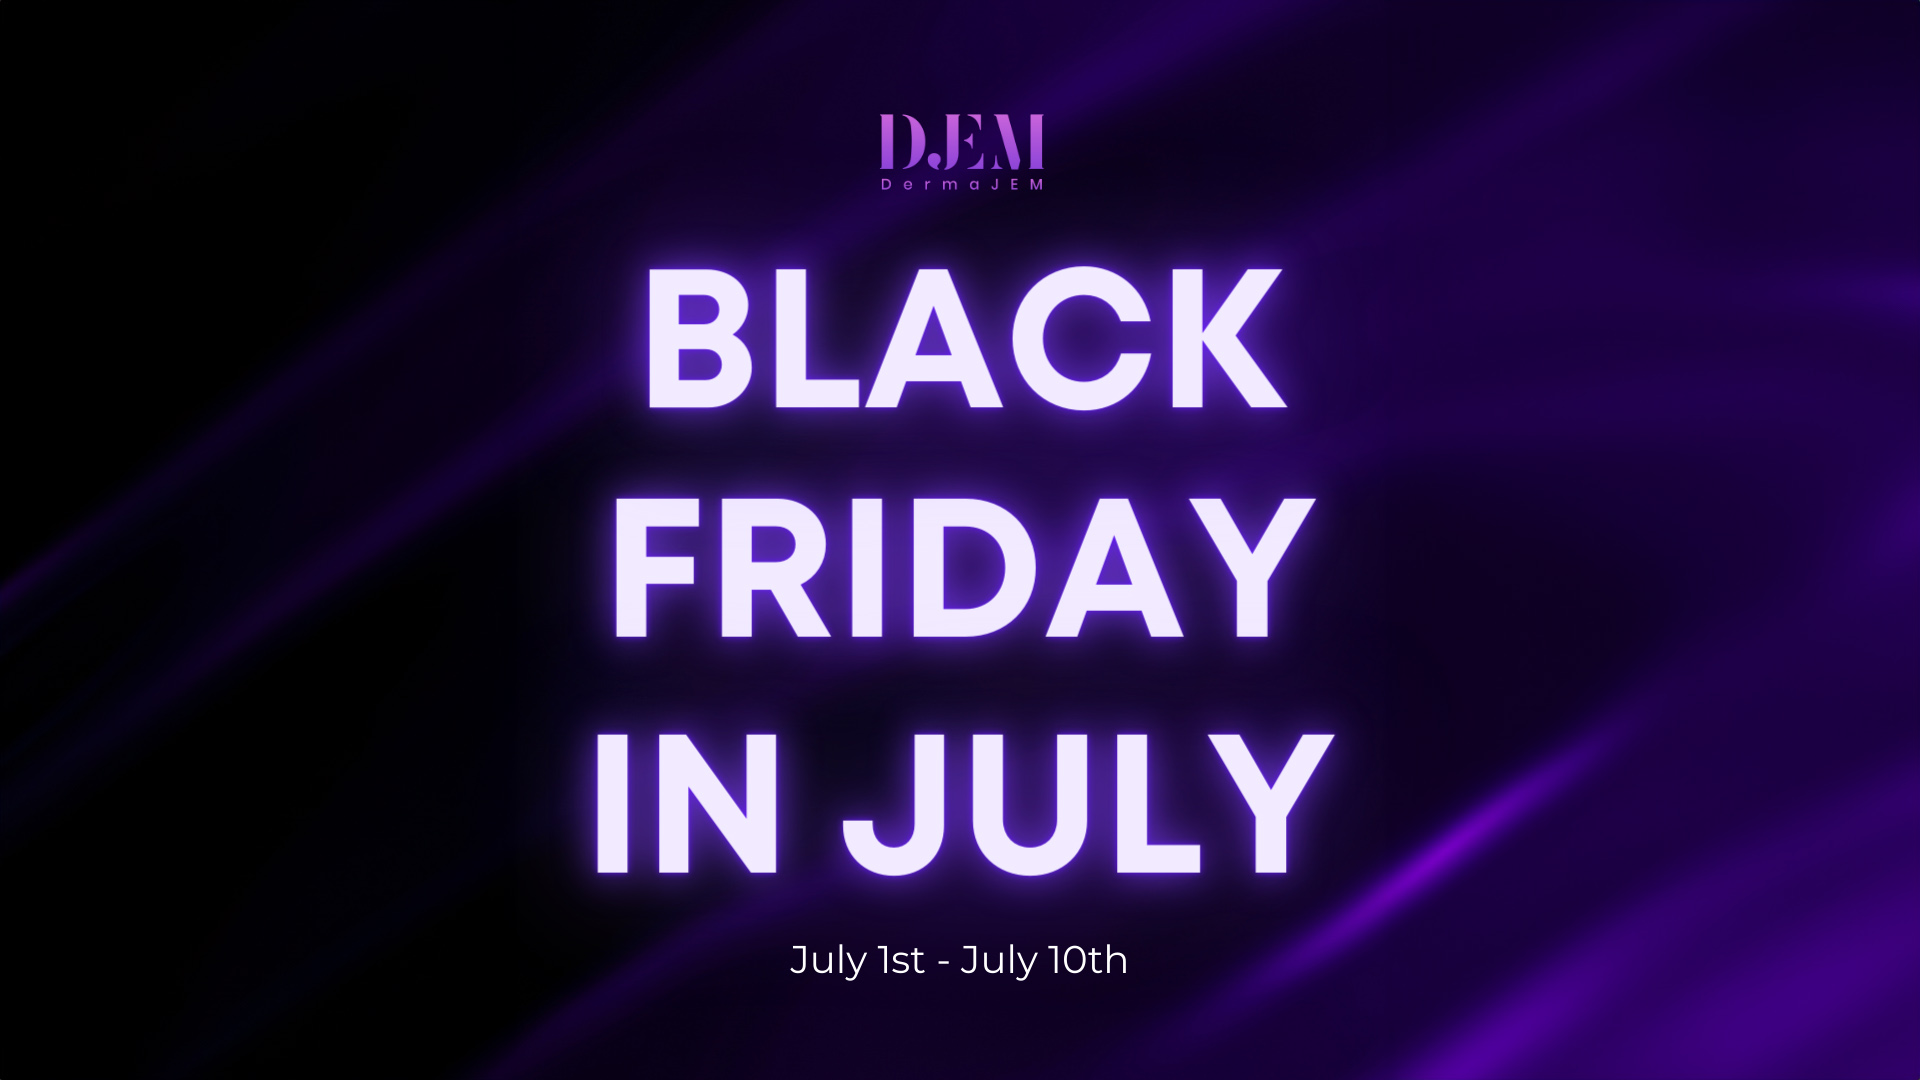 Black Friday in July